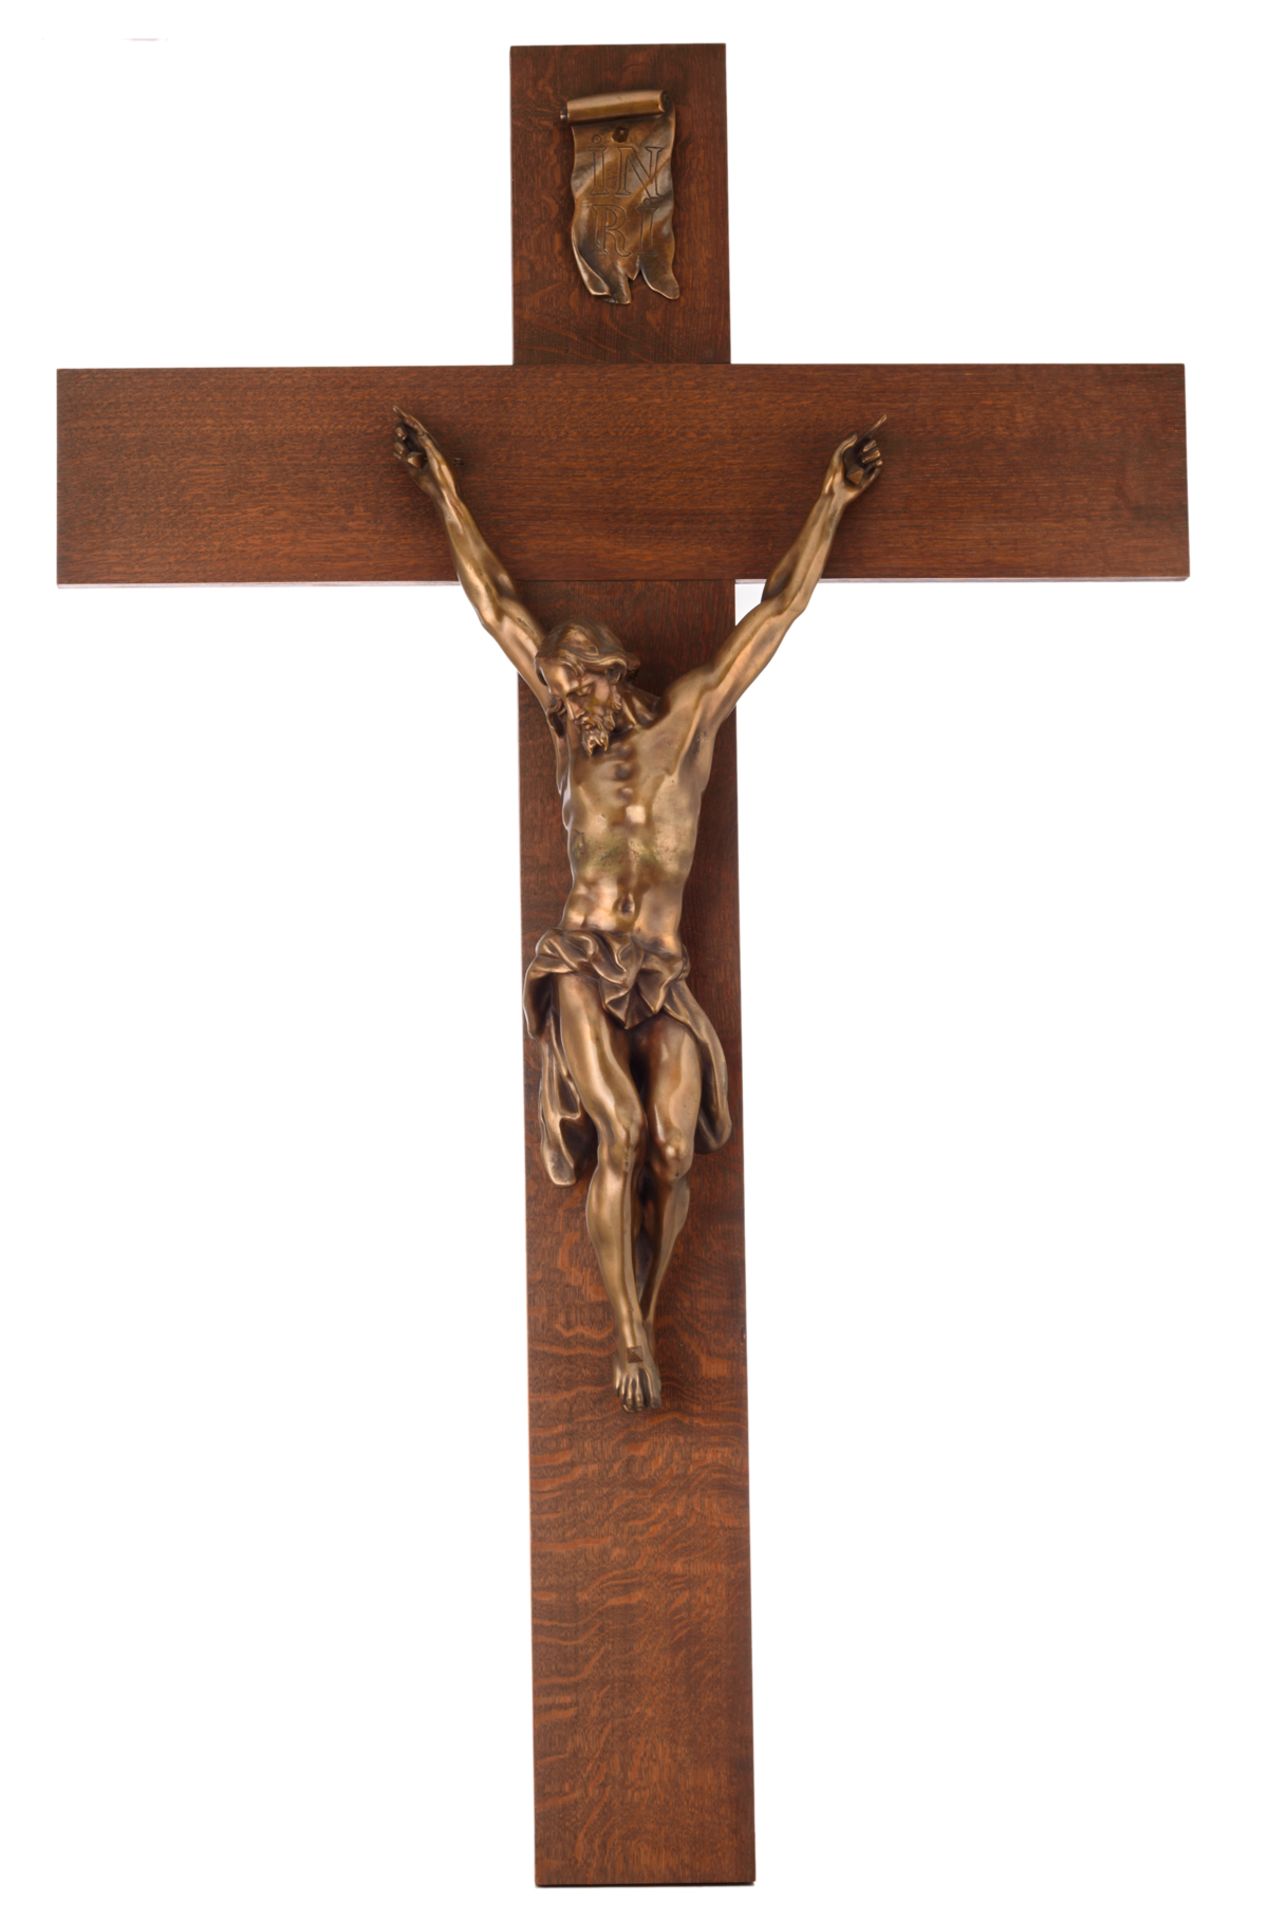 No visible signature, a patinated bronze Corpus Christi on an oak crucifix, H 82 (Corpus Christi)